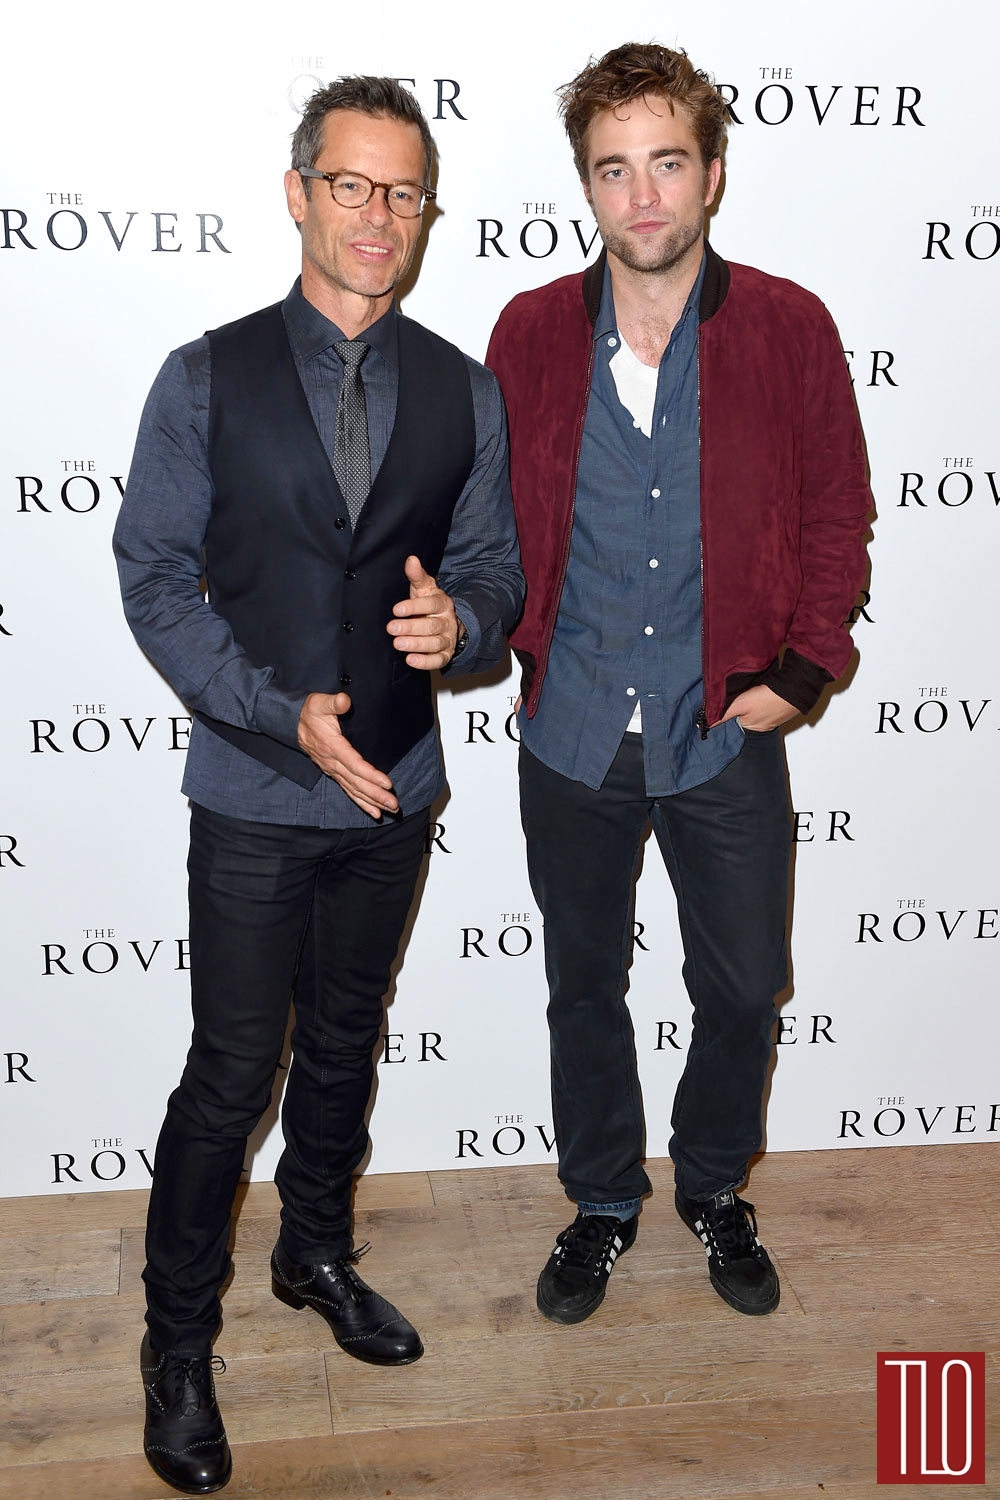 Guy-Pearce-Robert-Pattinson-The-Rover-London-Photocall-Tom-Lorenzo-Site-TLO (1)